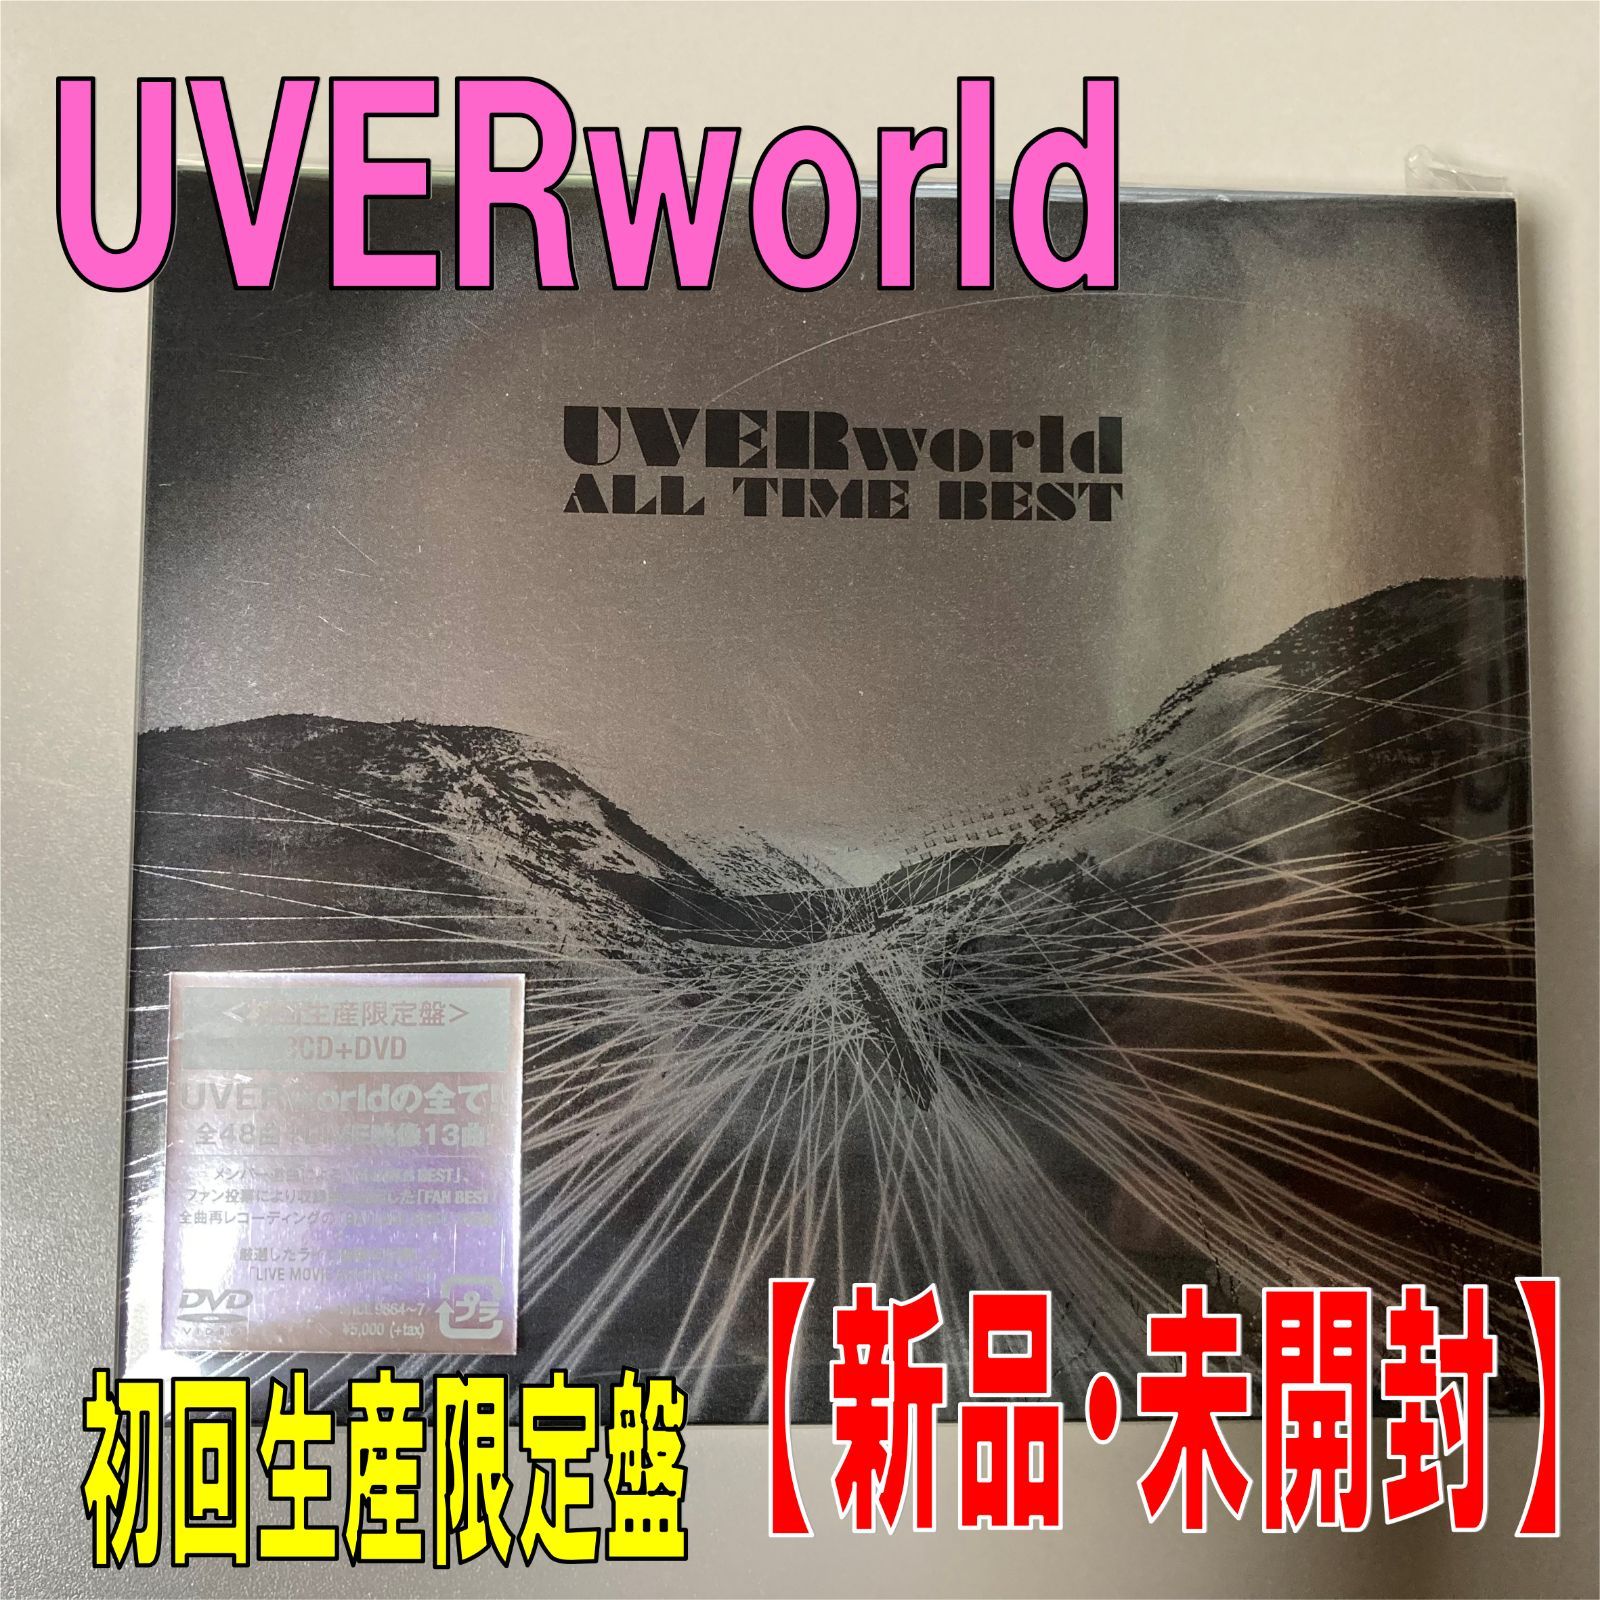 CD】UVERworld【ALL TIME BEST】【初回生産限定盤3CD+DVD】【新品 未